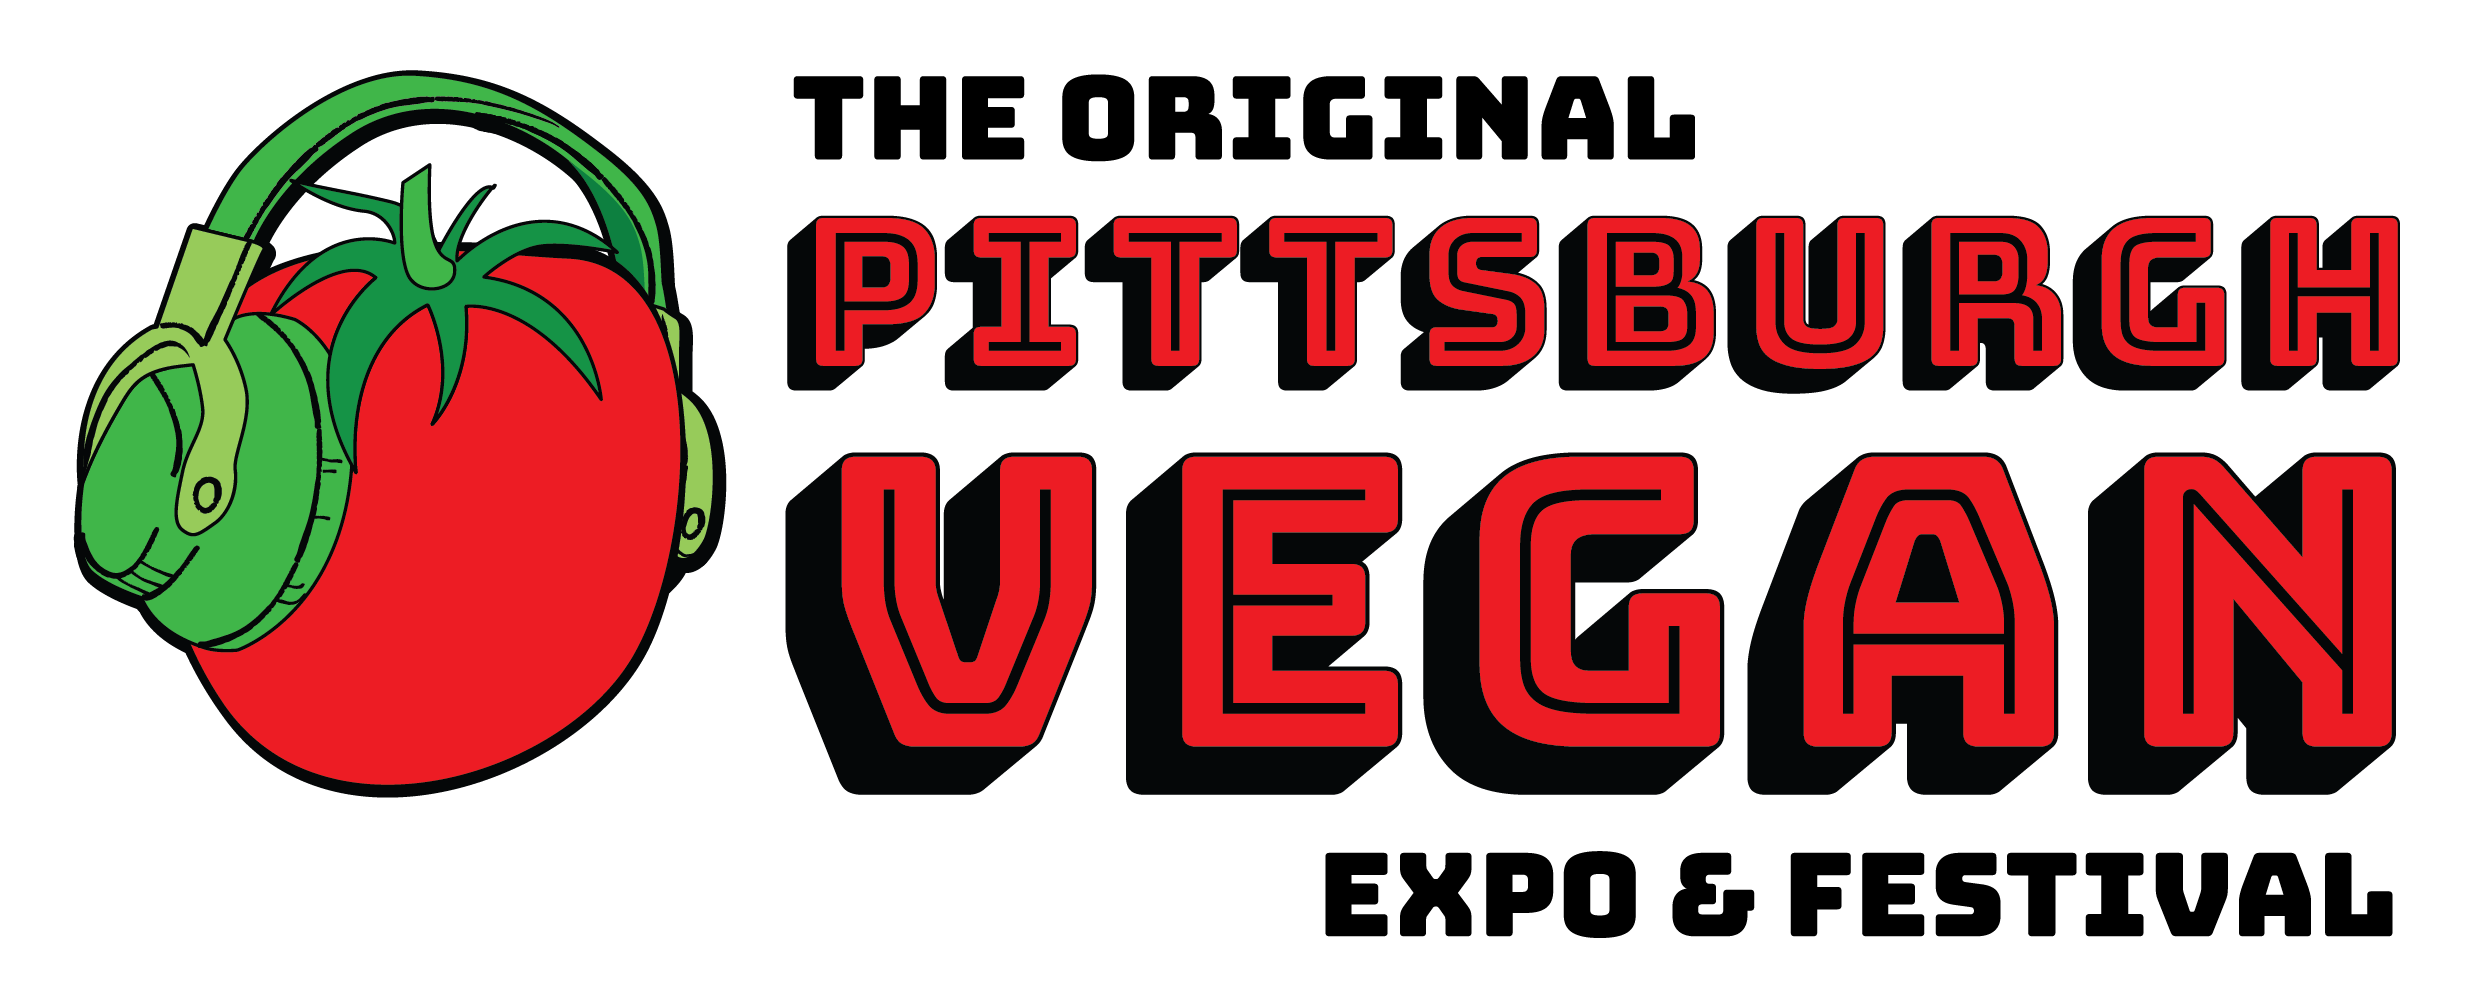 The Original Pittsburgh Vegan Expo & Festival